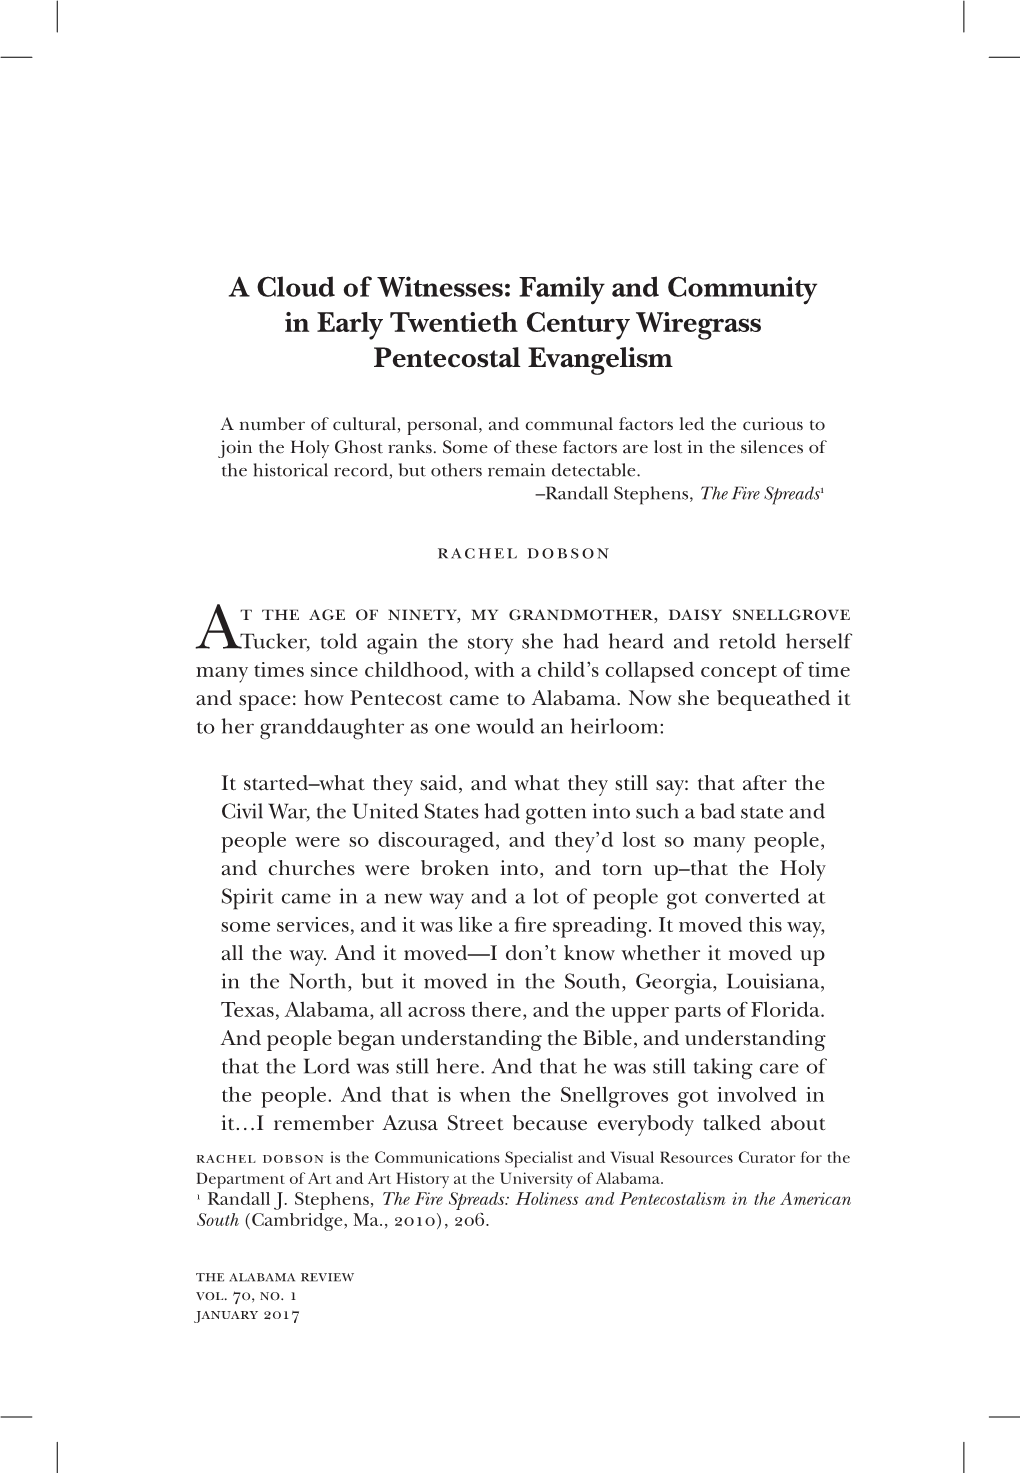 Family and Community in Early Twentieth Century Wiregrass Pentecostal Evangelism